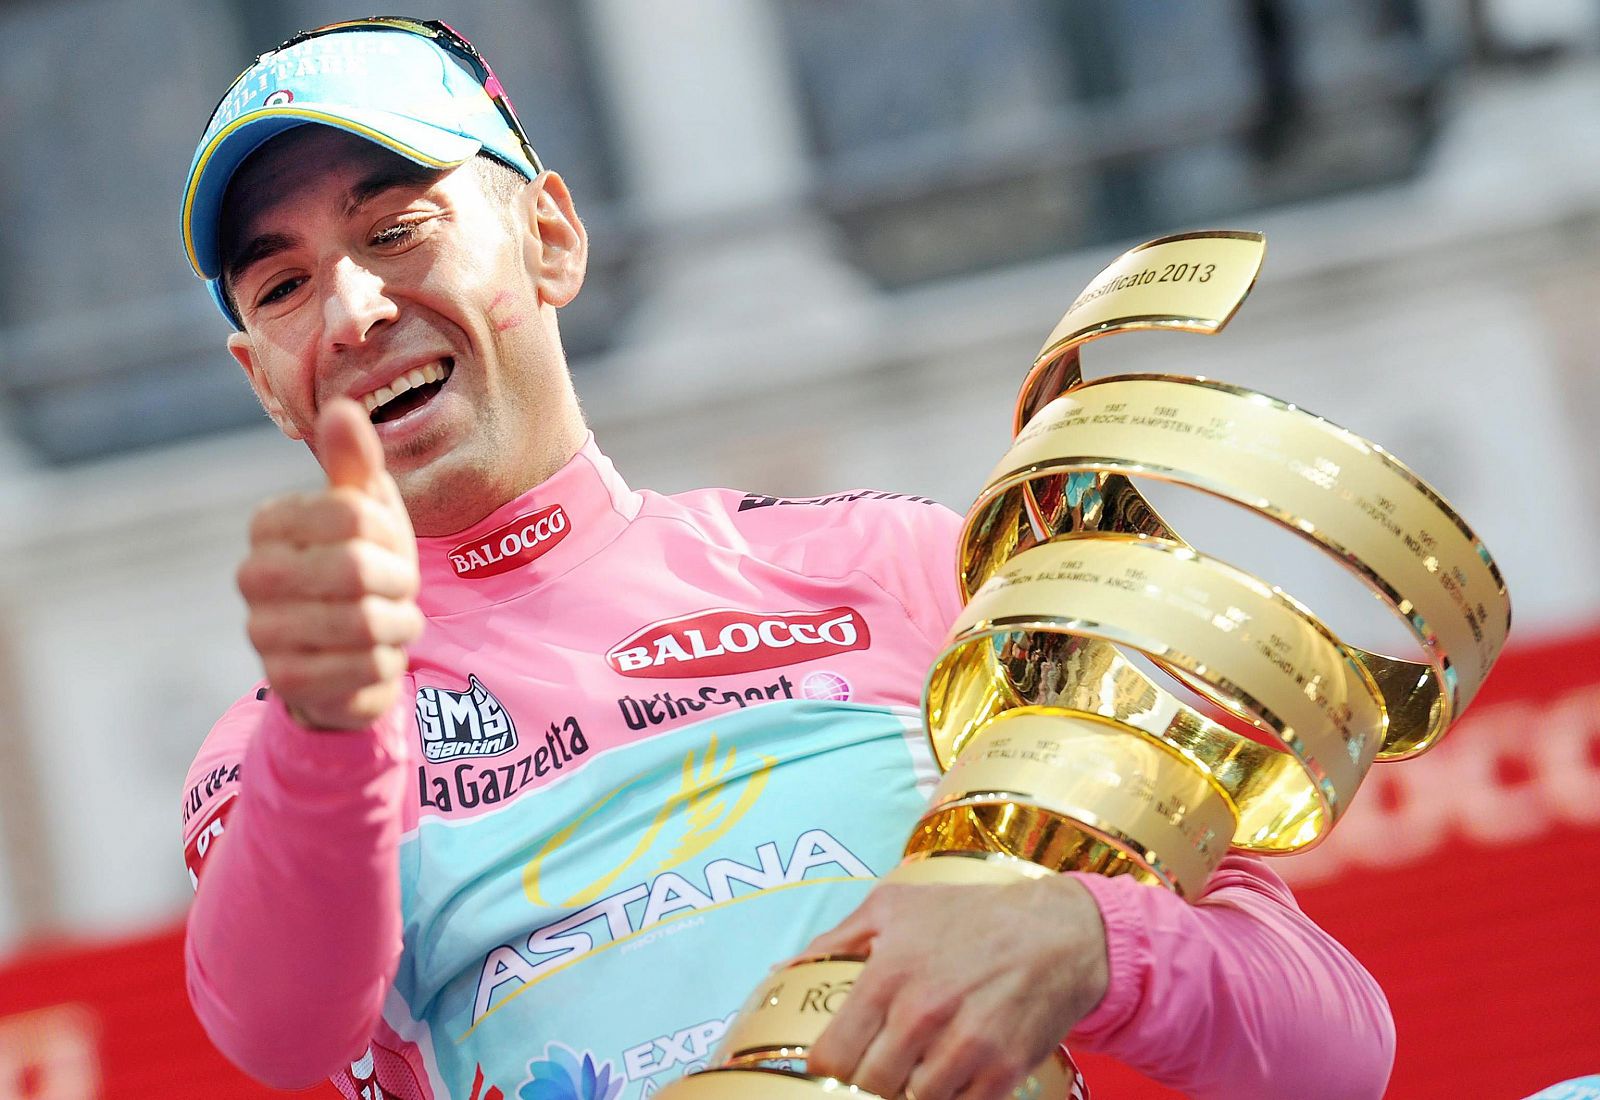 96th Giro d'Italia cycling race - last stage